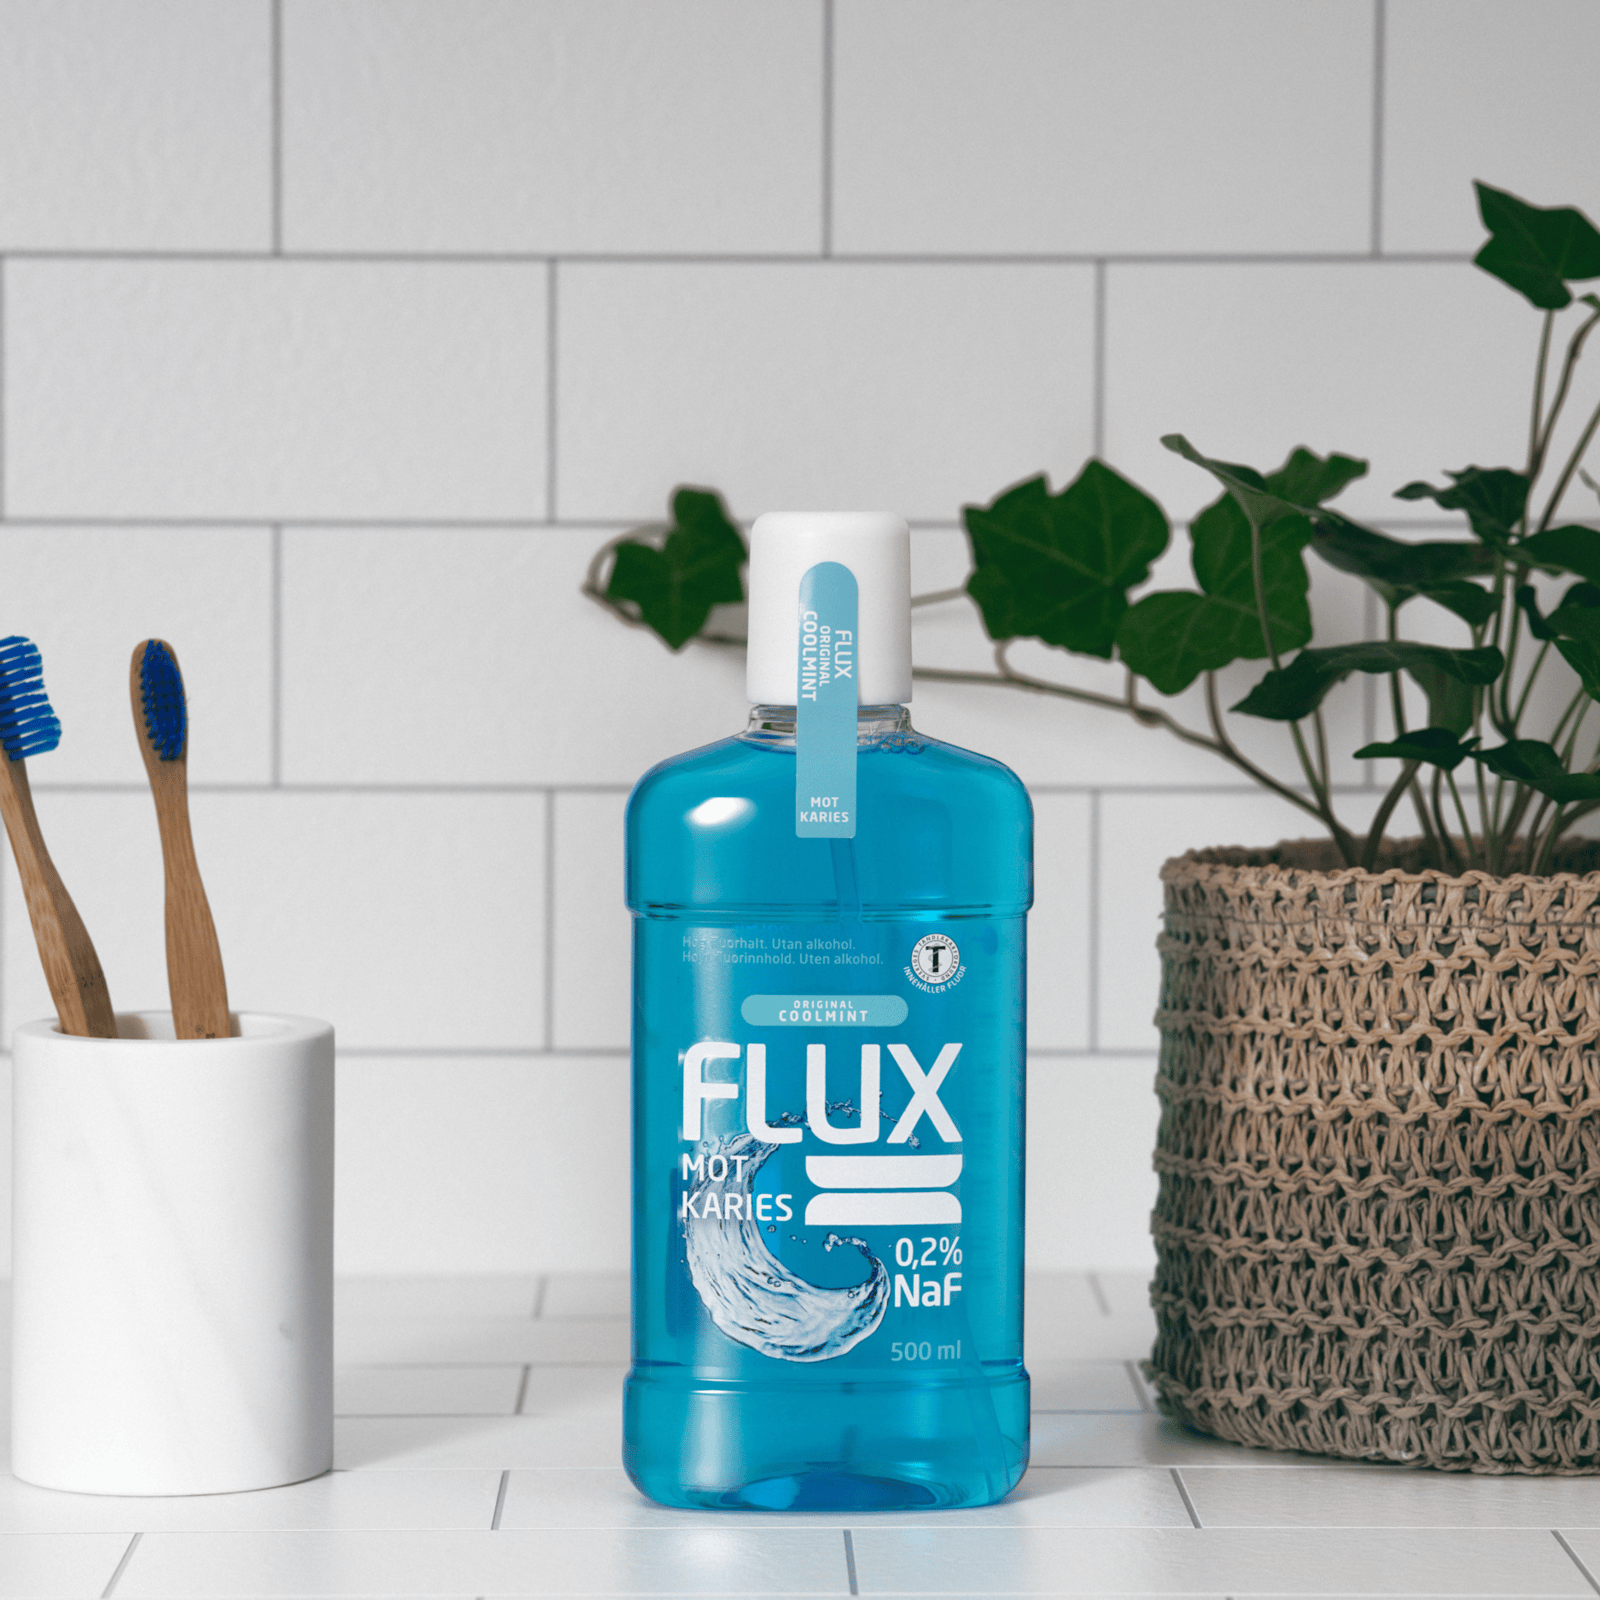 FLUX Original Coolmint 500 ml